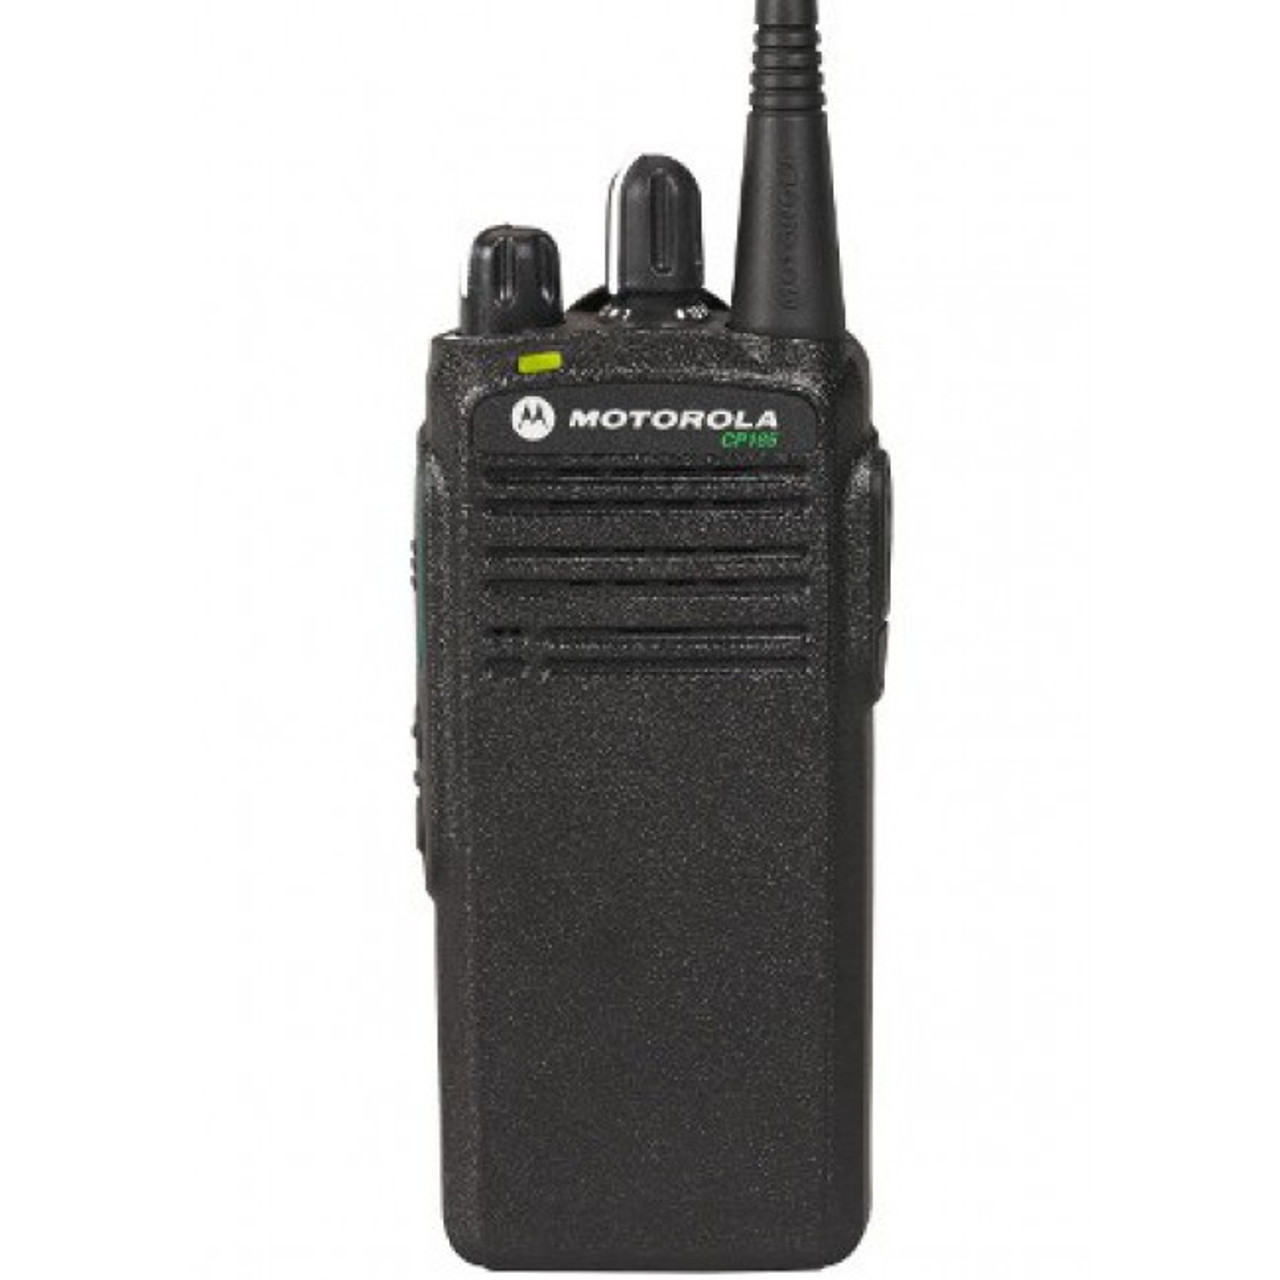 Motorola CP185 No Key Pad, UHF or VHF Two Way Radio